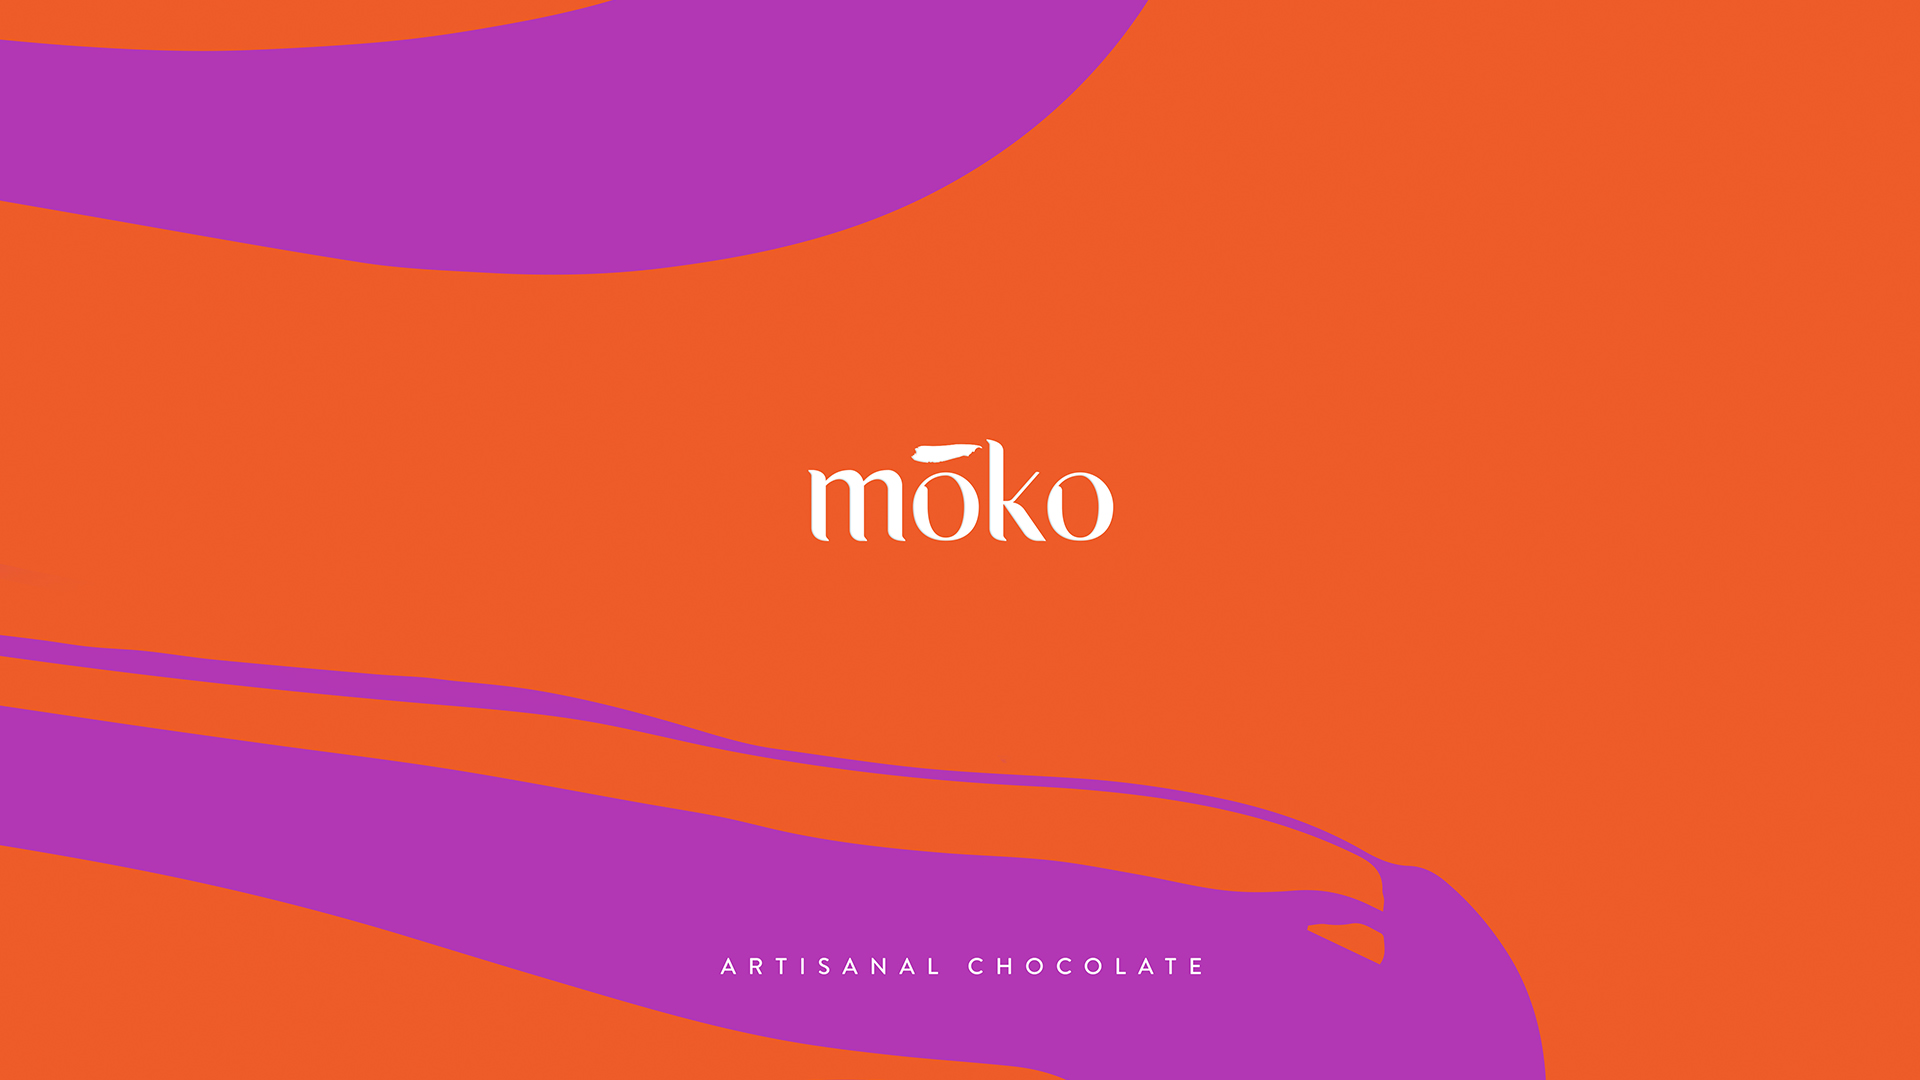 The Brand Company Creates Moko Artisanal Chocolate Brand Identity and Packaging Design